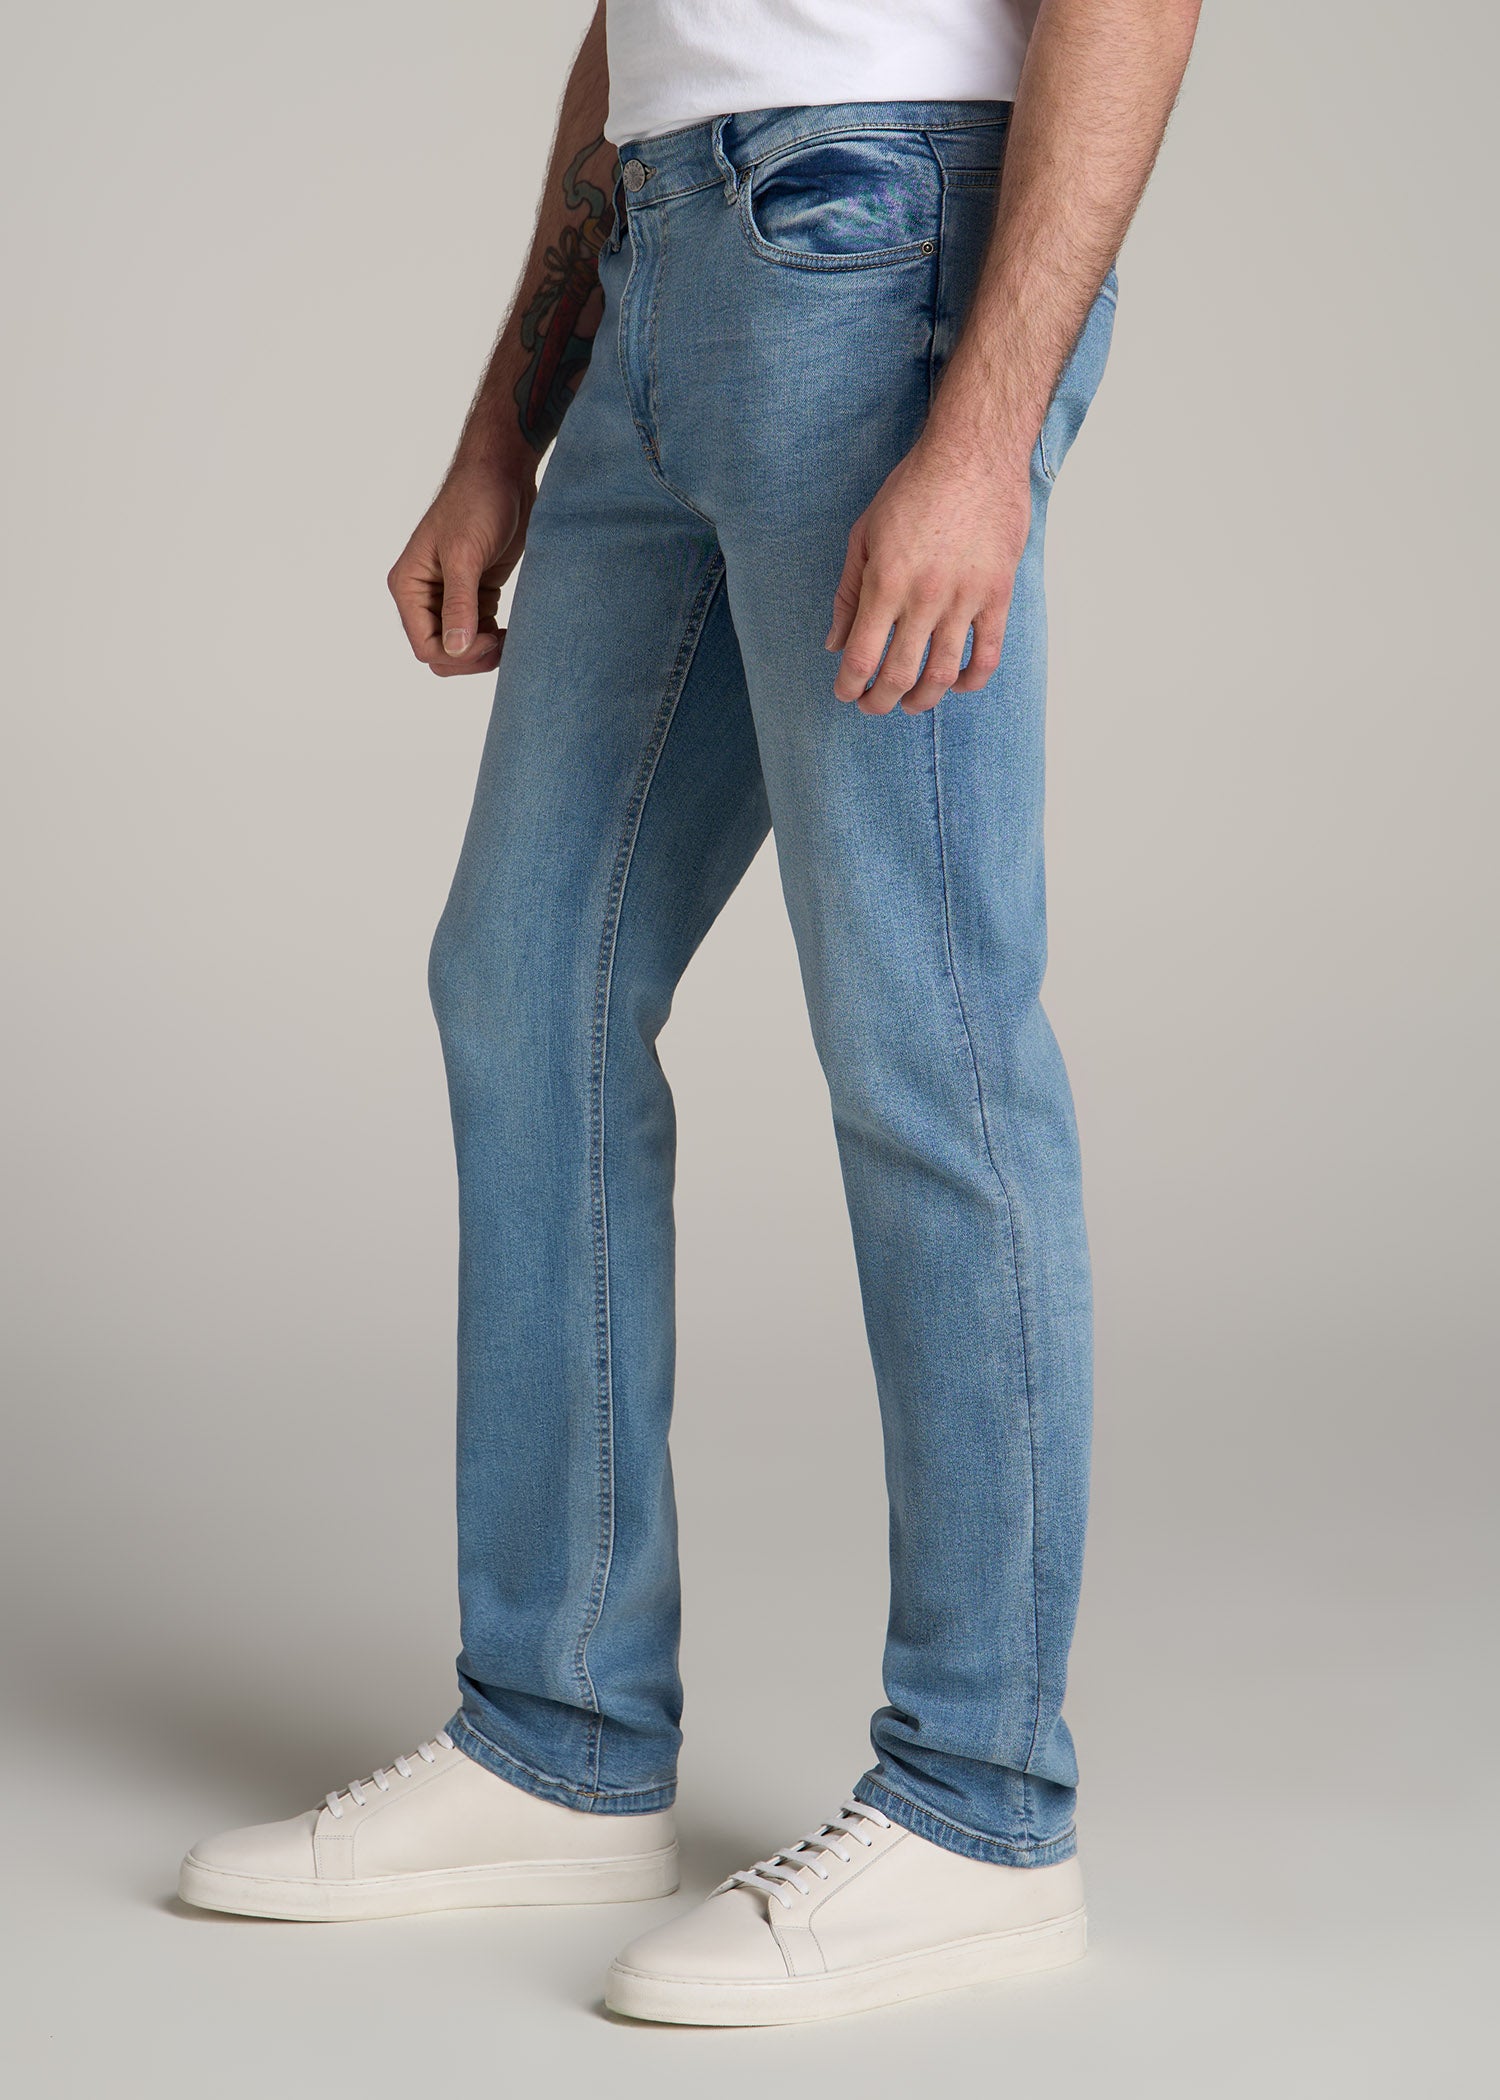 J Brand Mens Denim Zip Up Mid Rise Straight Leg Jeans Pants Dark